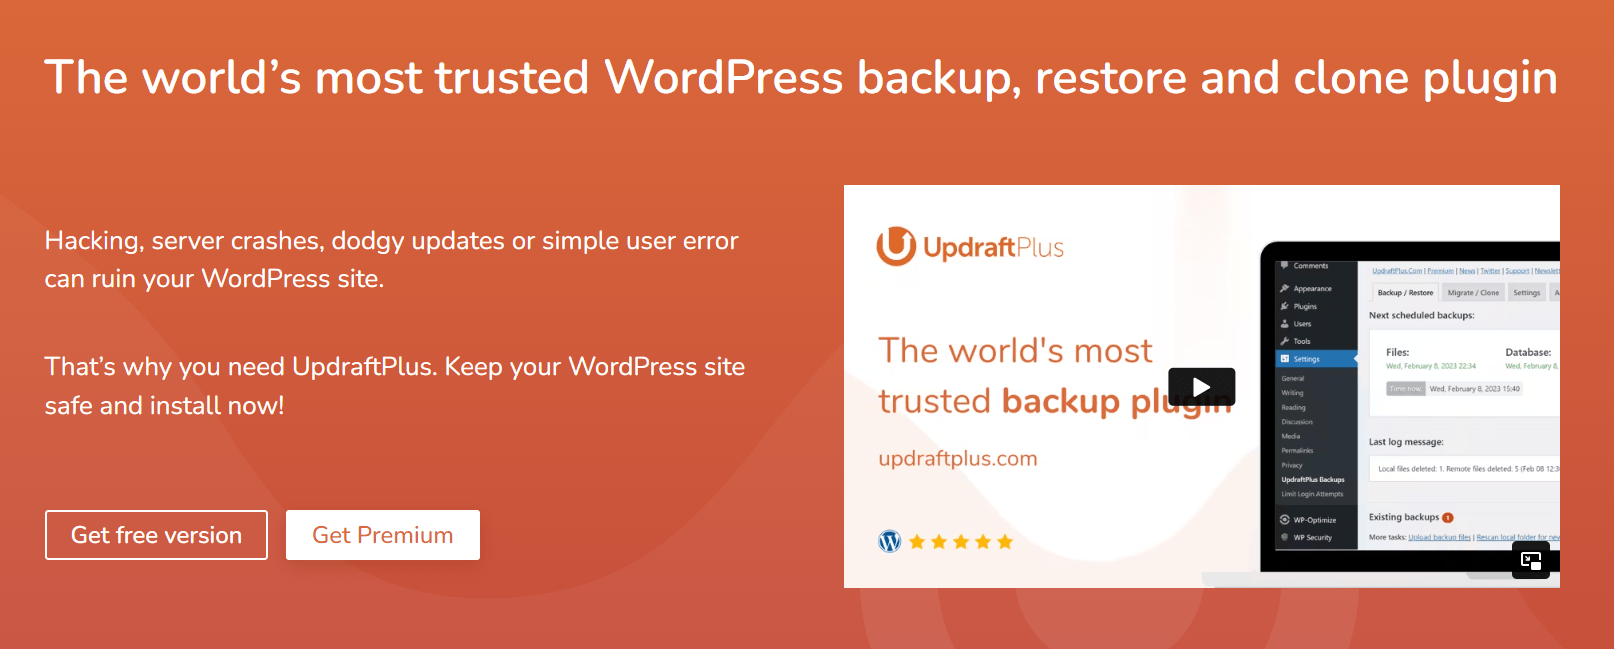 Website preview of updraft plus backup plugin